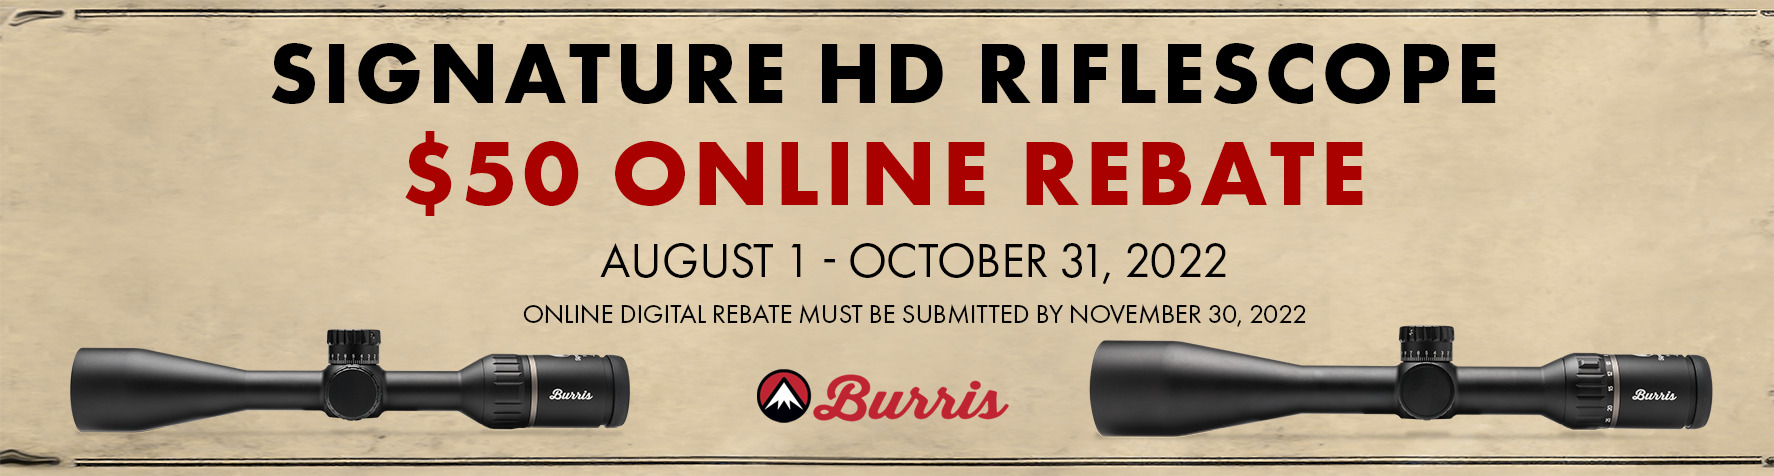 burris-signature-hd-riflescope-rebate